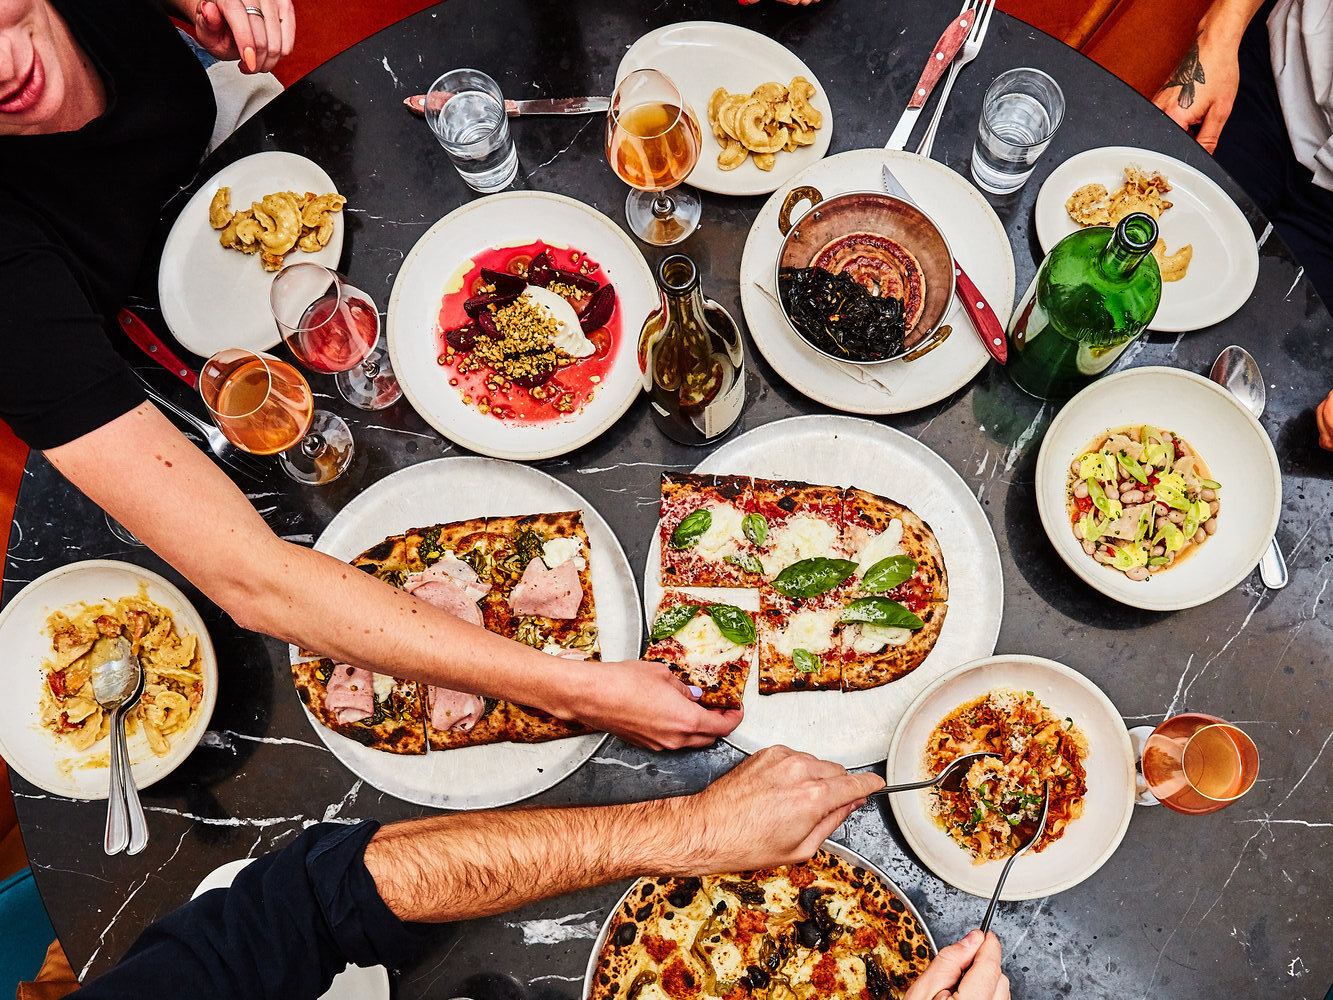 Siciliano - Pizza - Order Now Menu - Chicago Italian Restaurant -  Mediterranean Dining